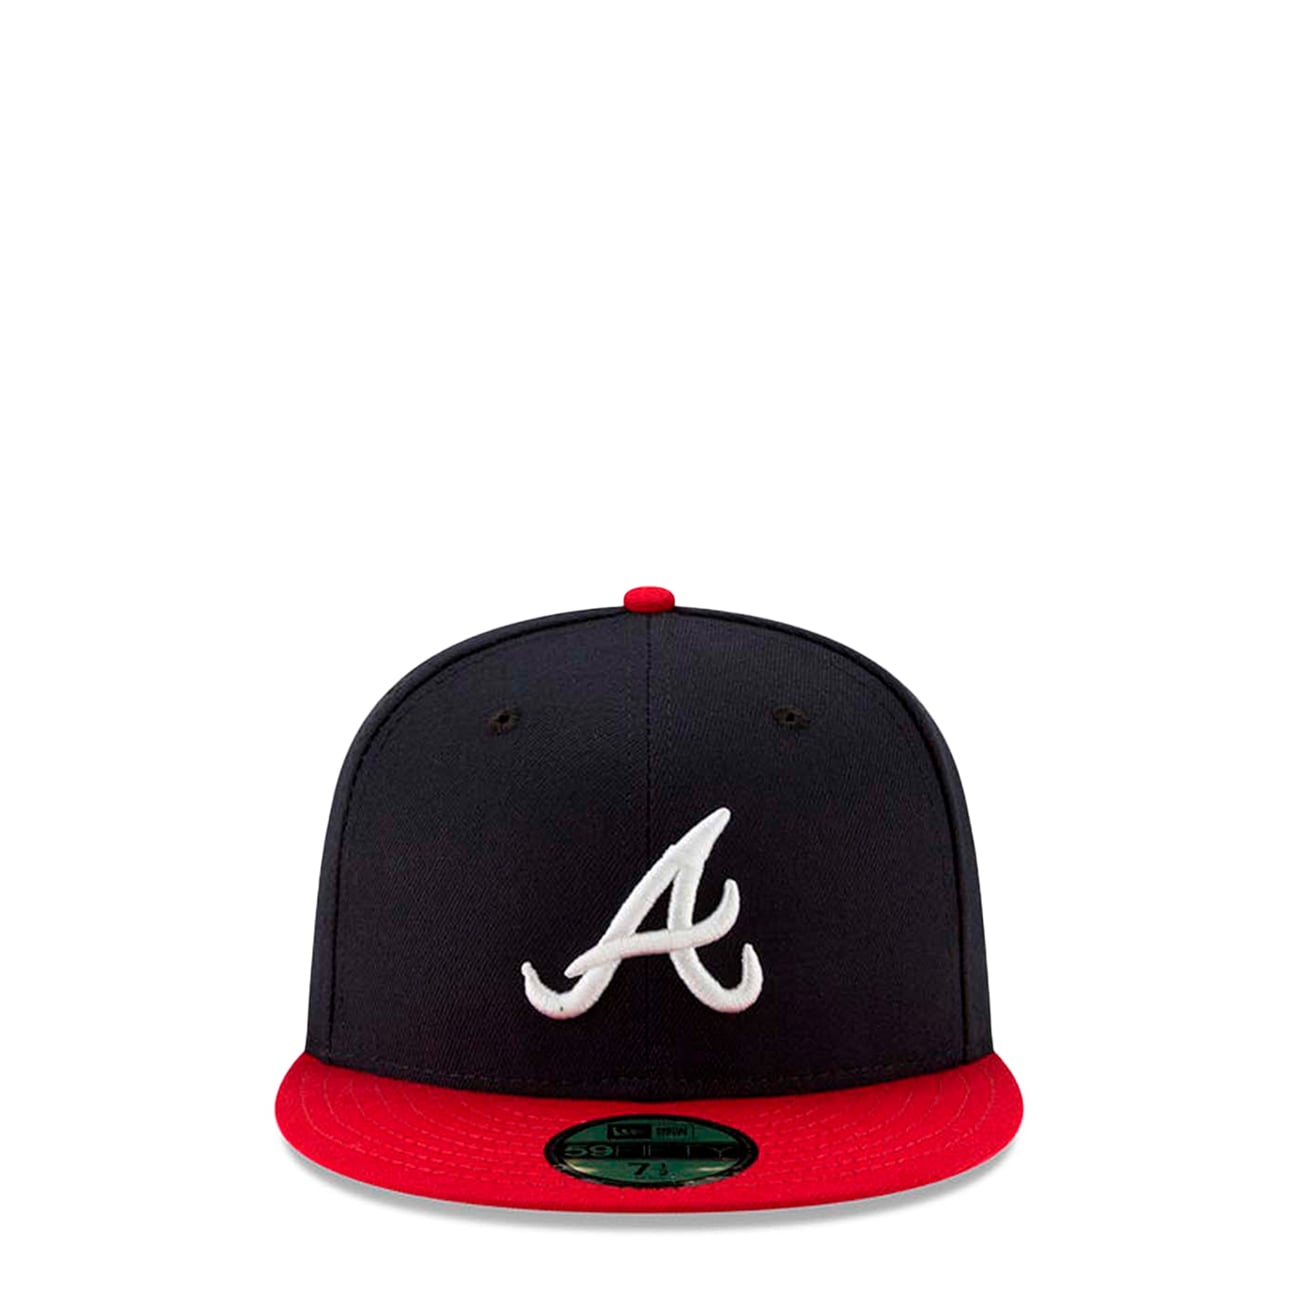 Vintage New Era Men's Atlanta Braves Camo HAT RED A